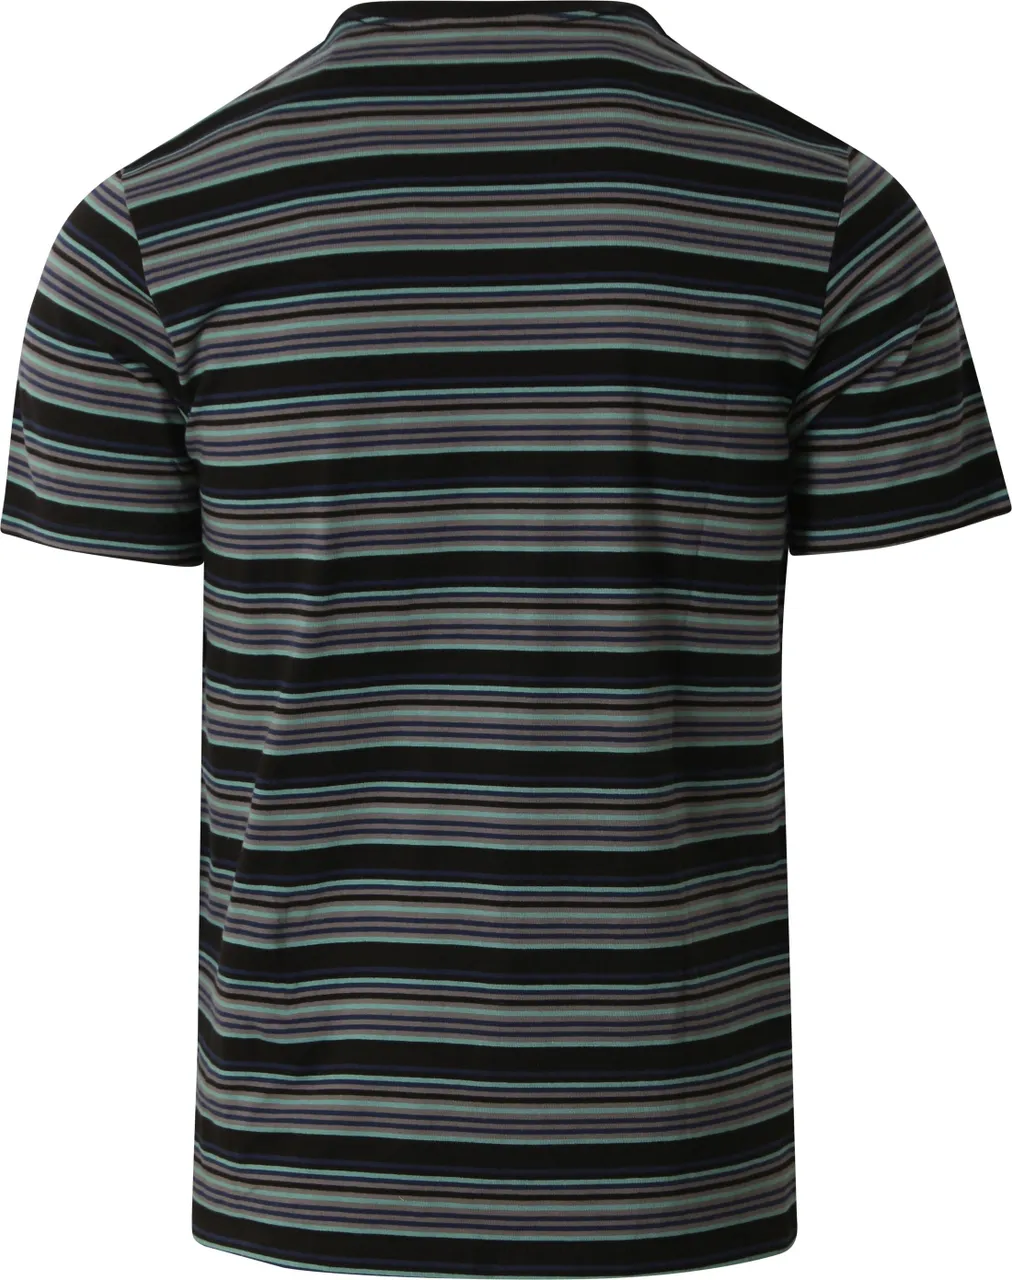 Levi's T-Shirt Stripe Black Multicolour